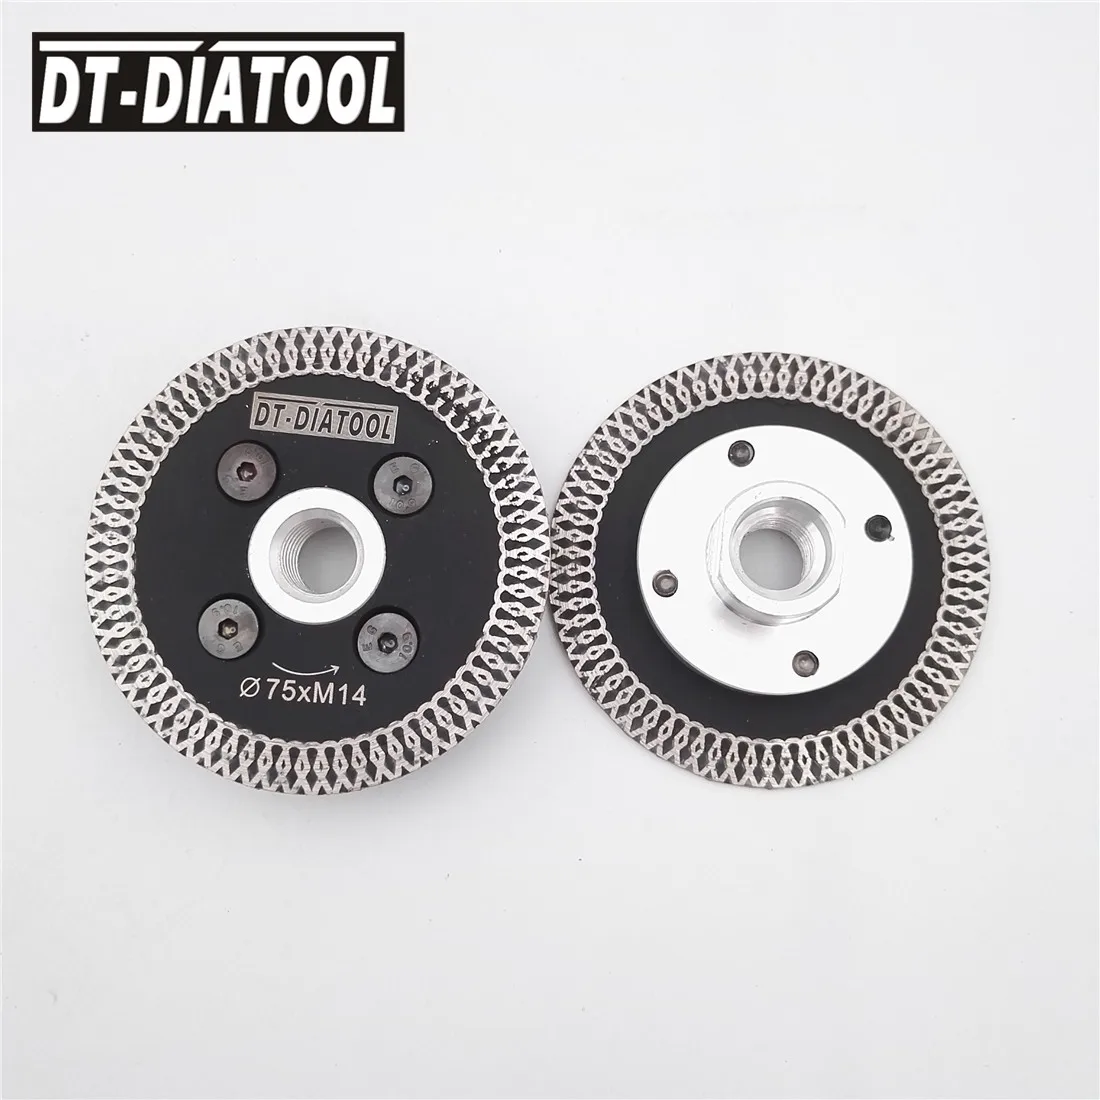 

DT-DIATOOL 2pcs 75MM Hot Pressed Mini Mesh Turbo Rim Diamond Blades with M14 Flange Cutting Discs Grinding Wheel for hard Stone